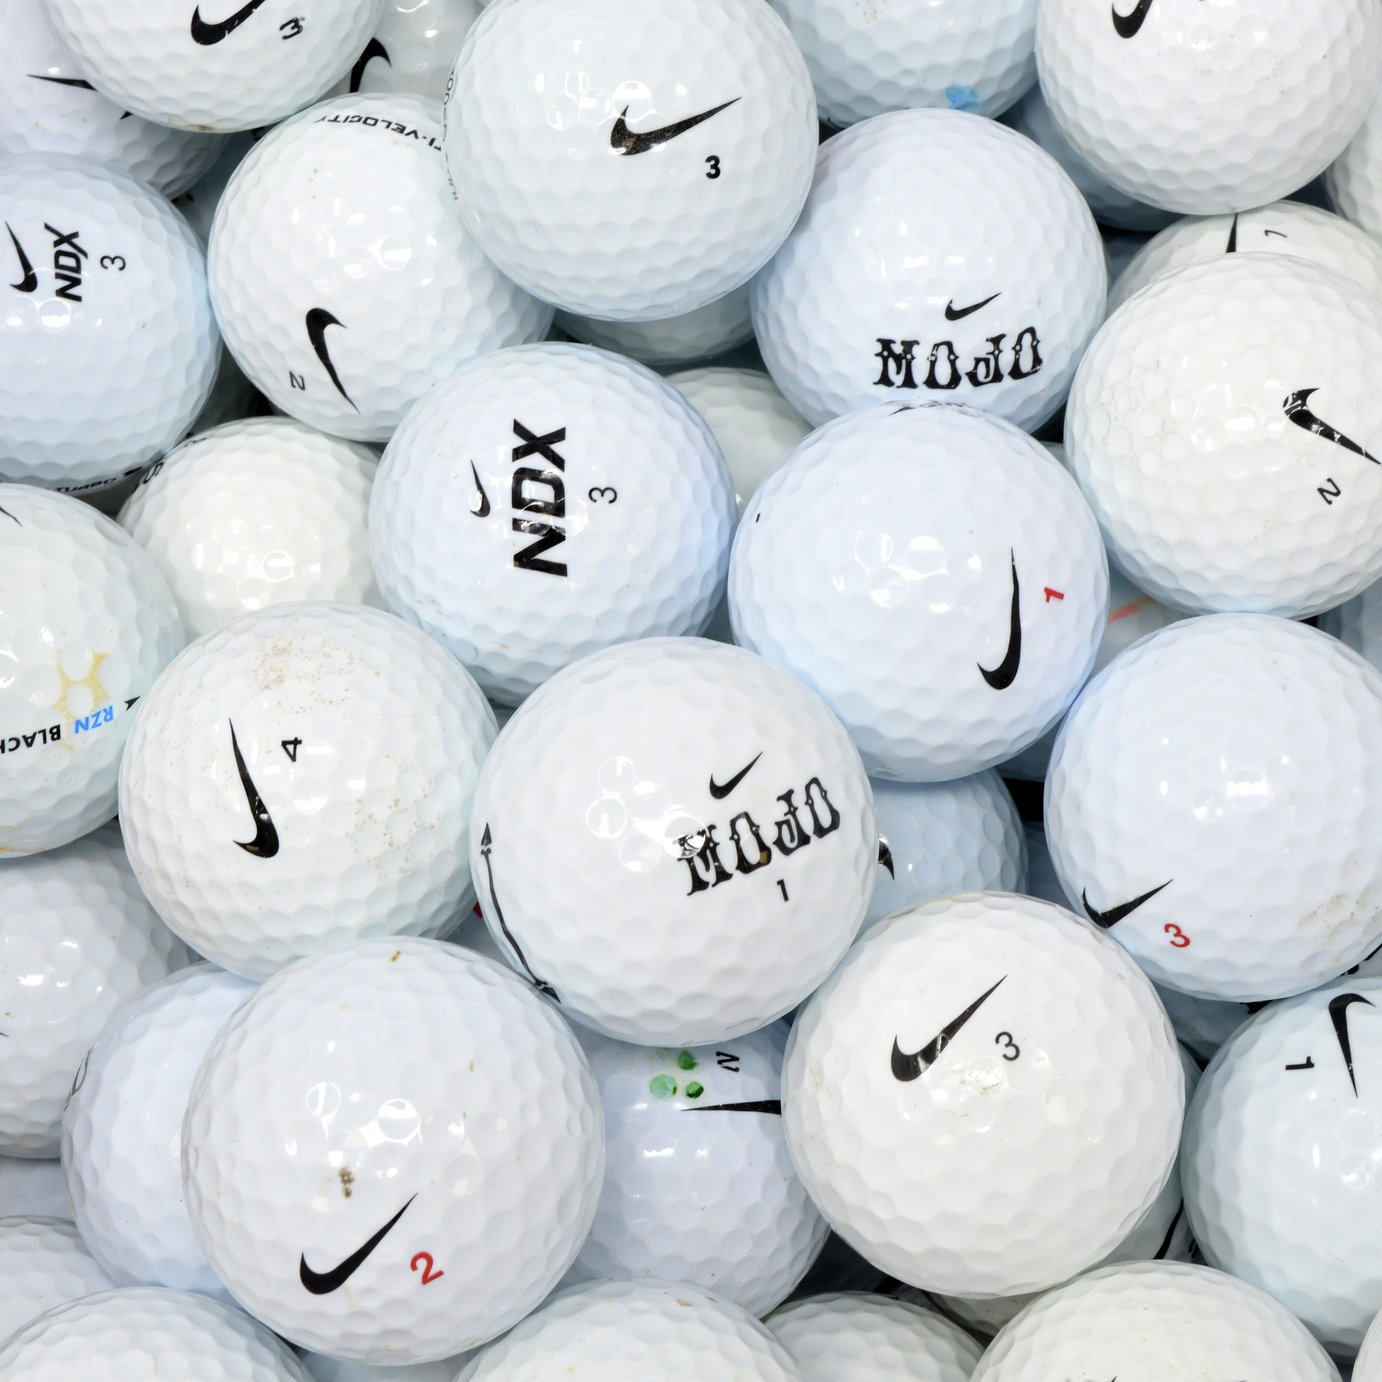 Nike Lake Golf Balls in a Box - Pack of 100